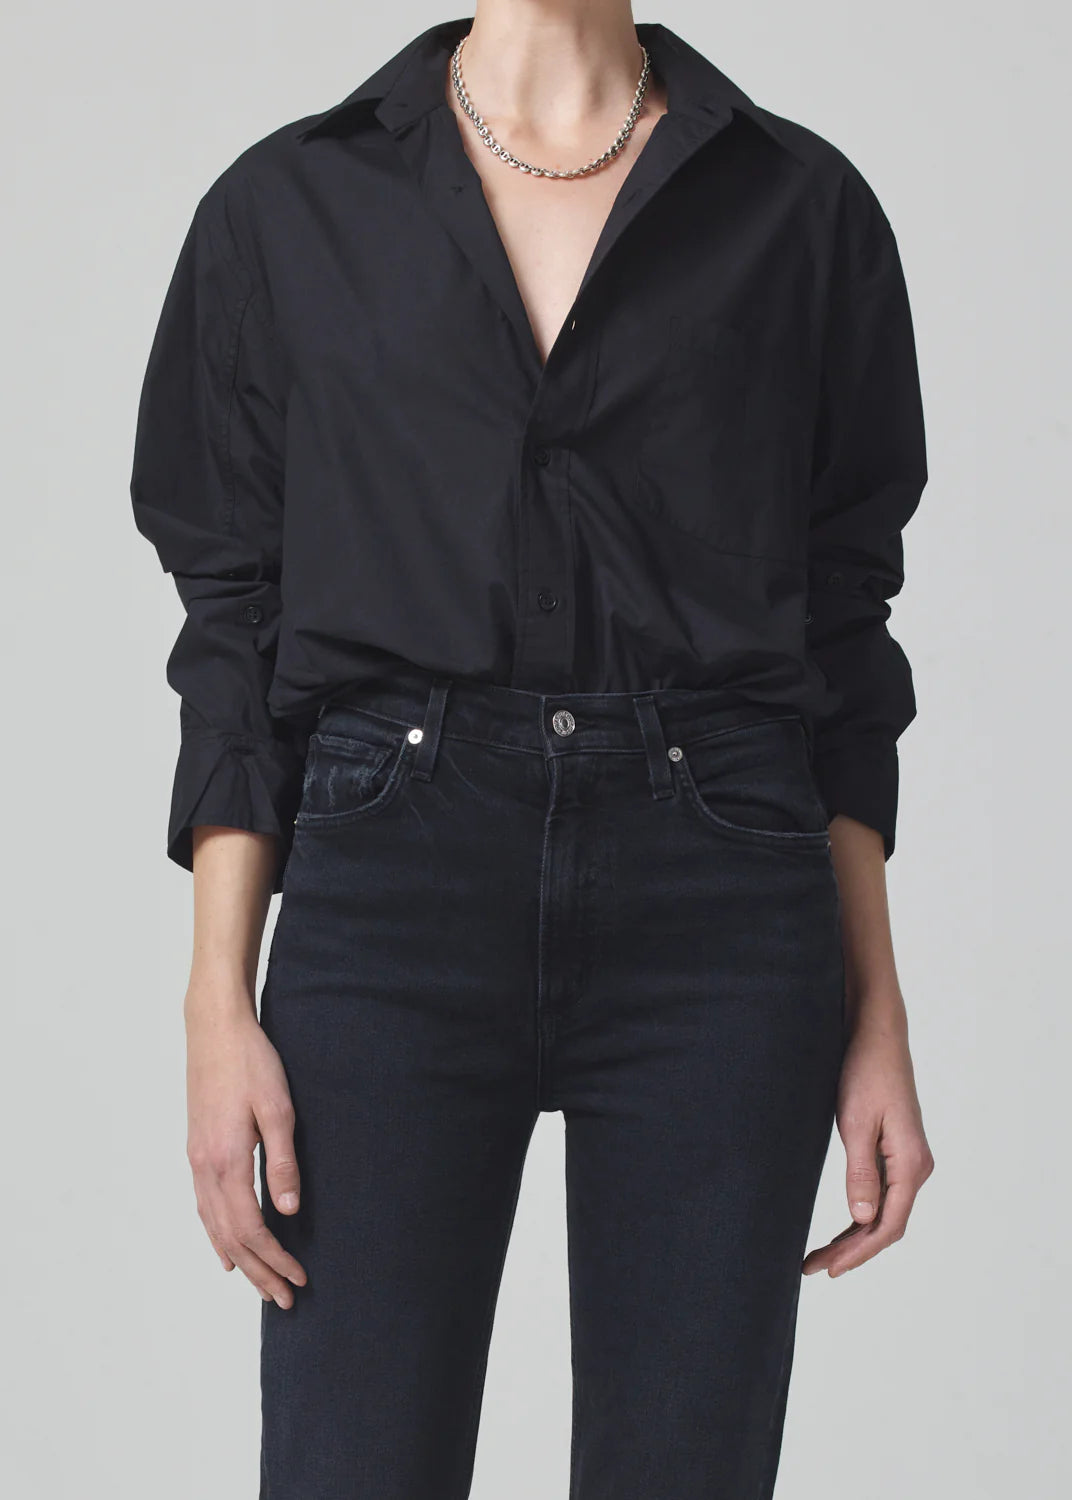 Kayla Shirt in Black